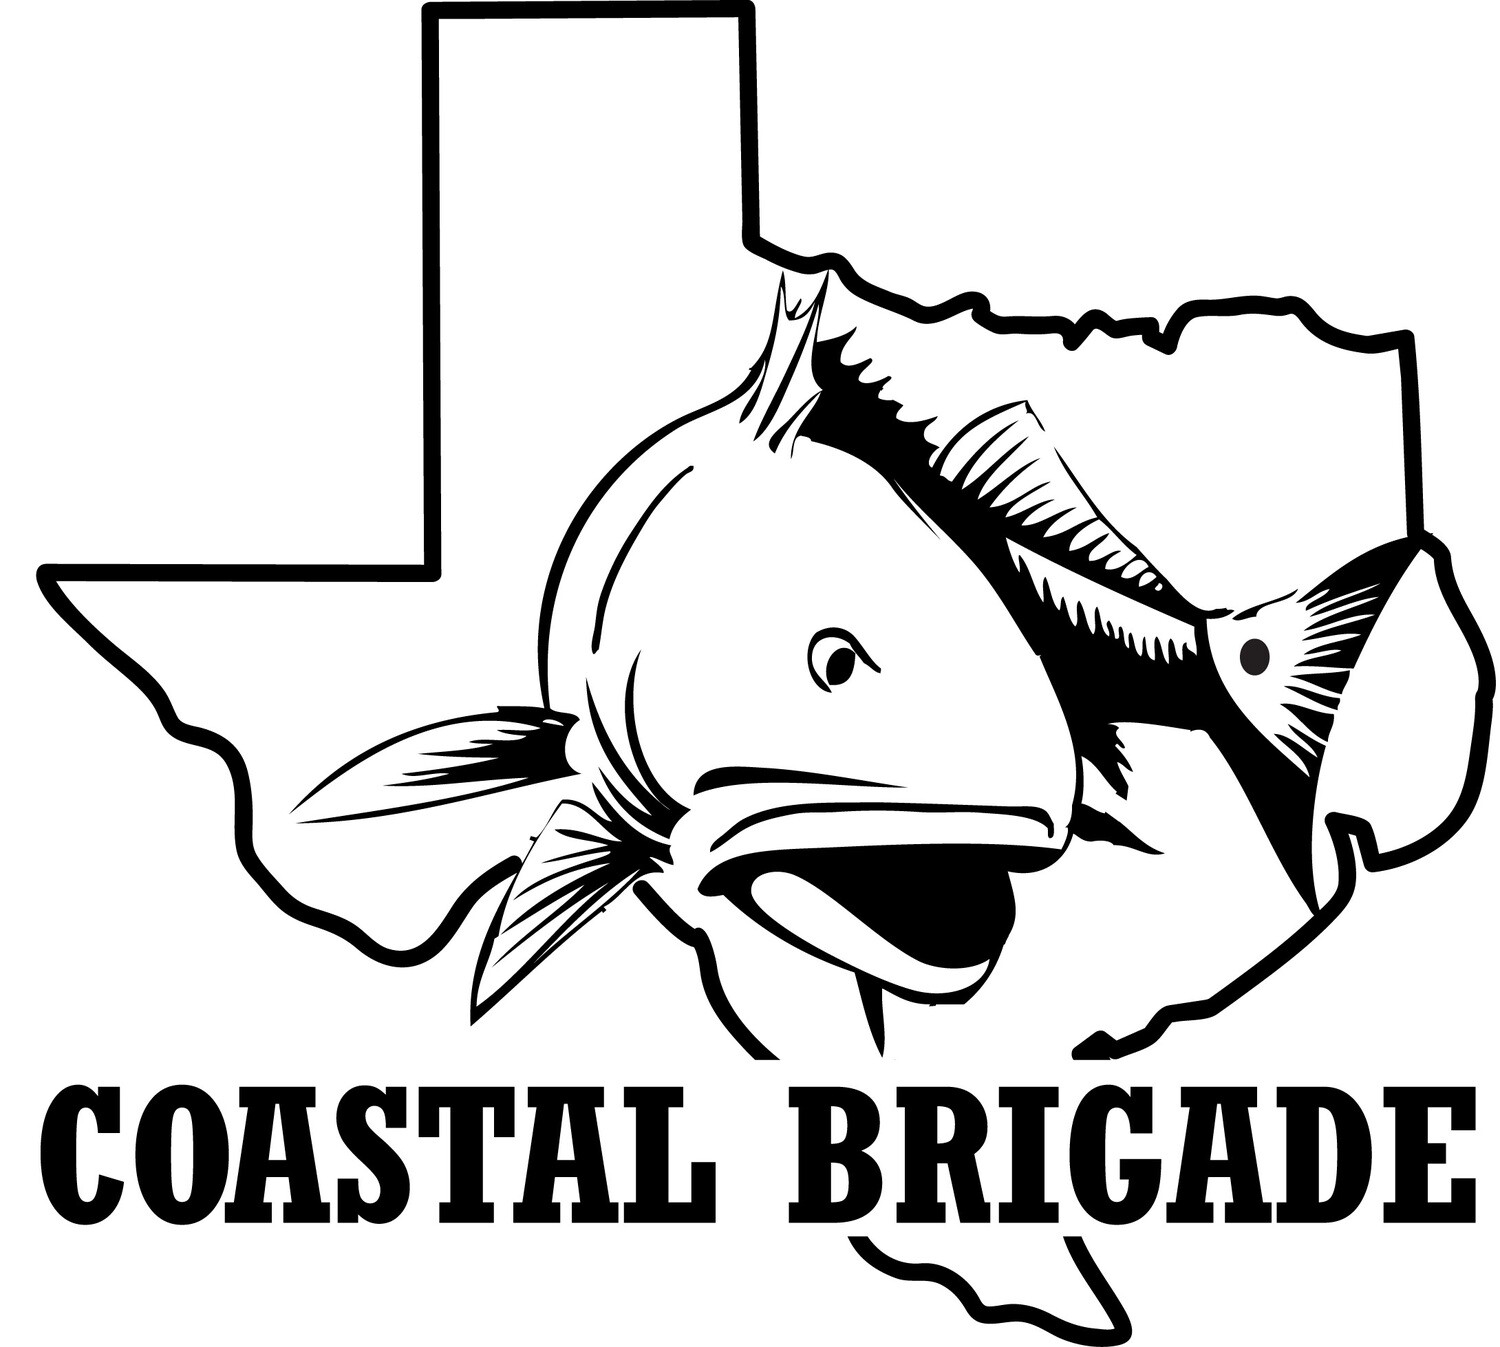 Reserved Table - Coastal Brigade Fundraiser